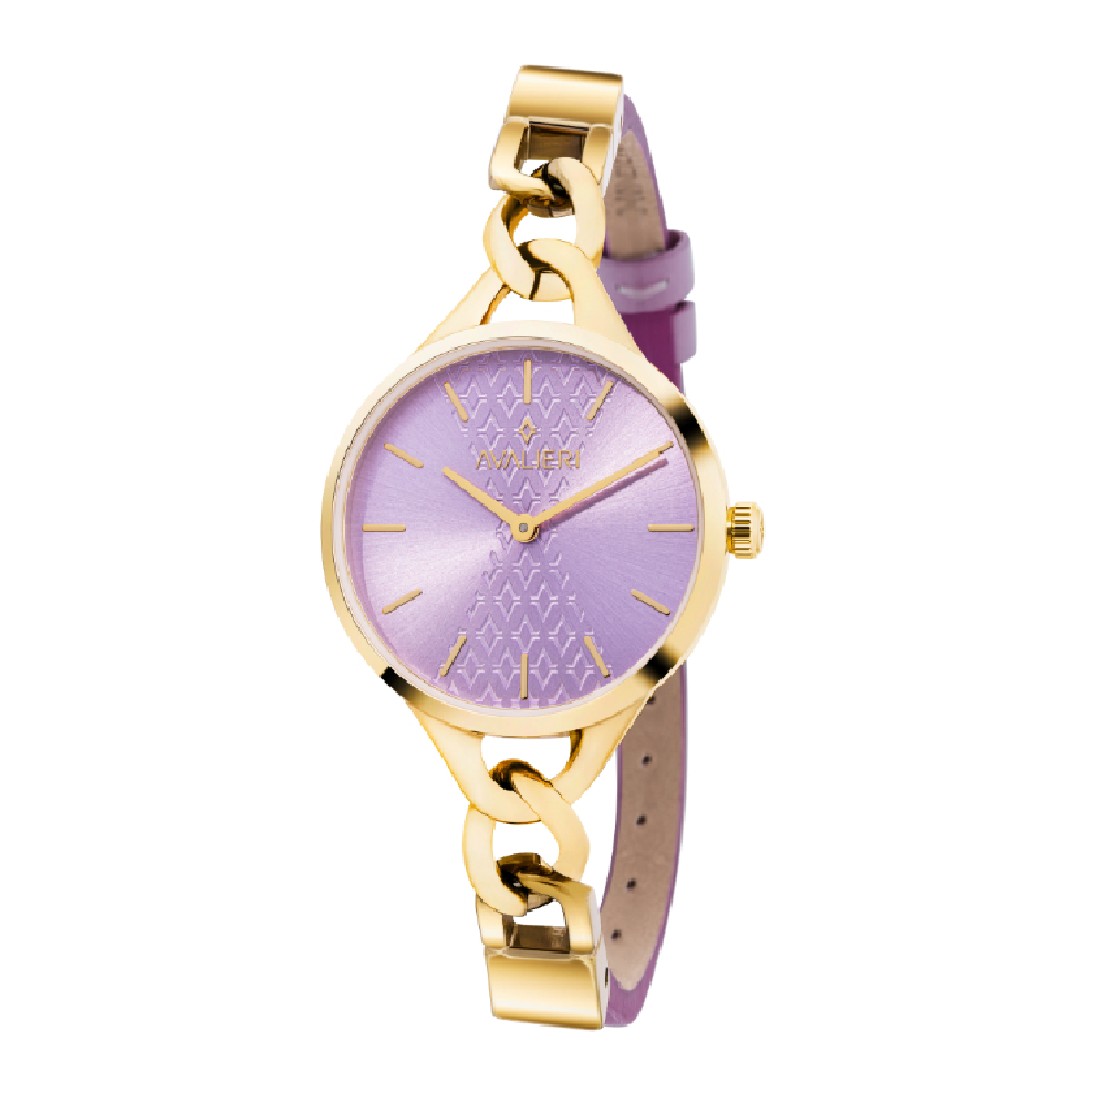 Avalieri Women's Quartz Watch Purple Dial - AV-2327B